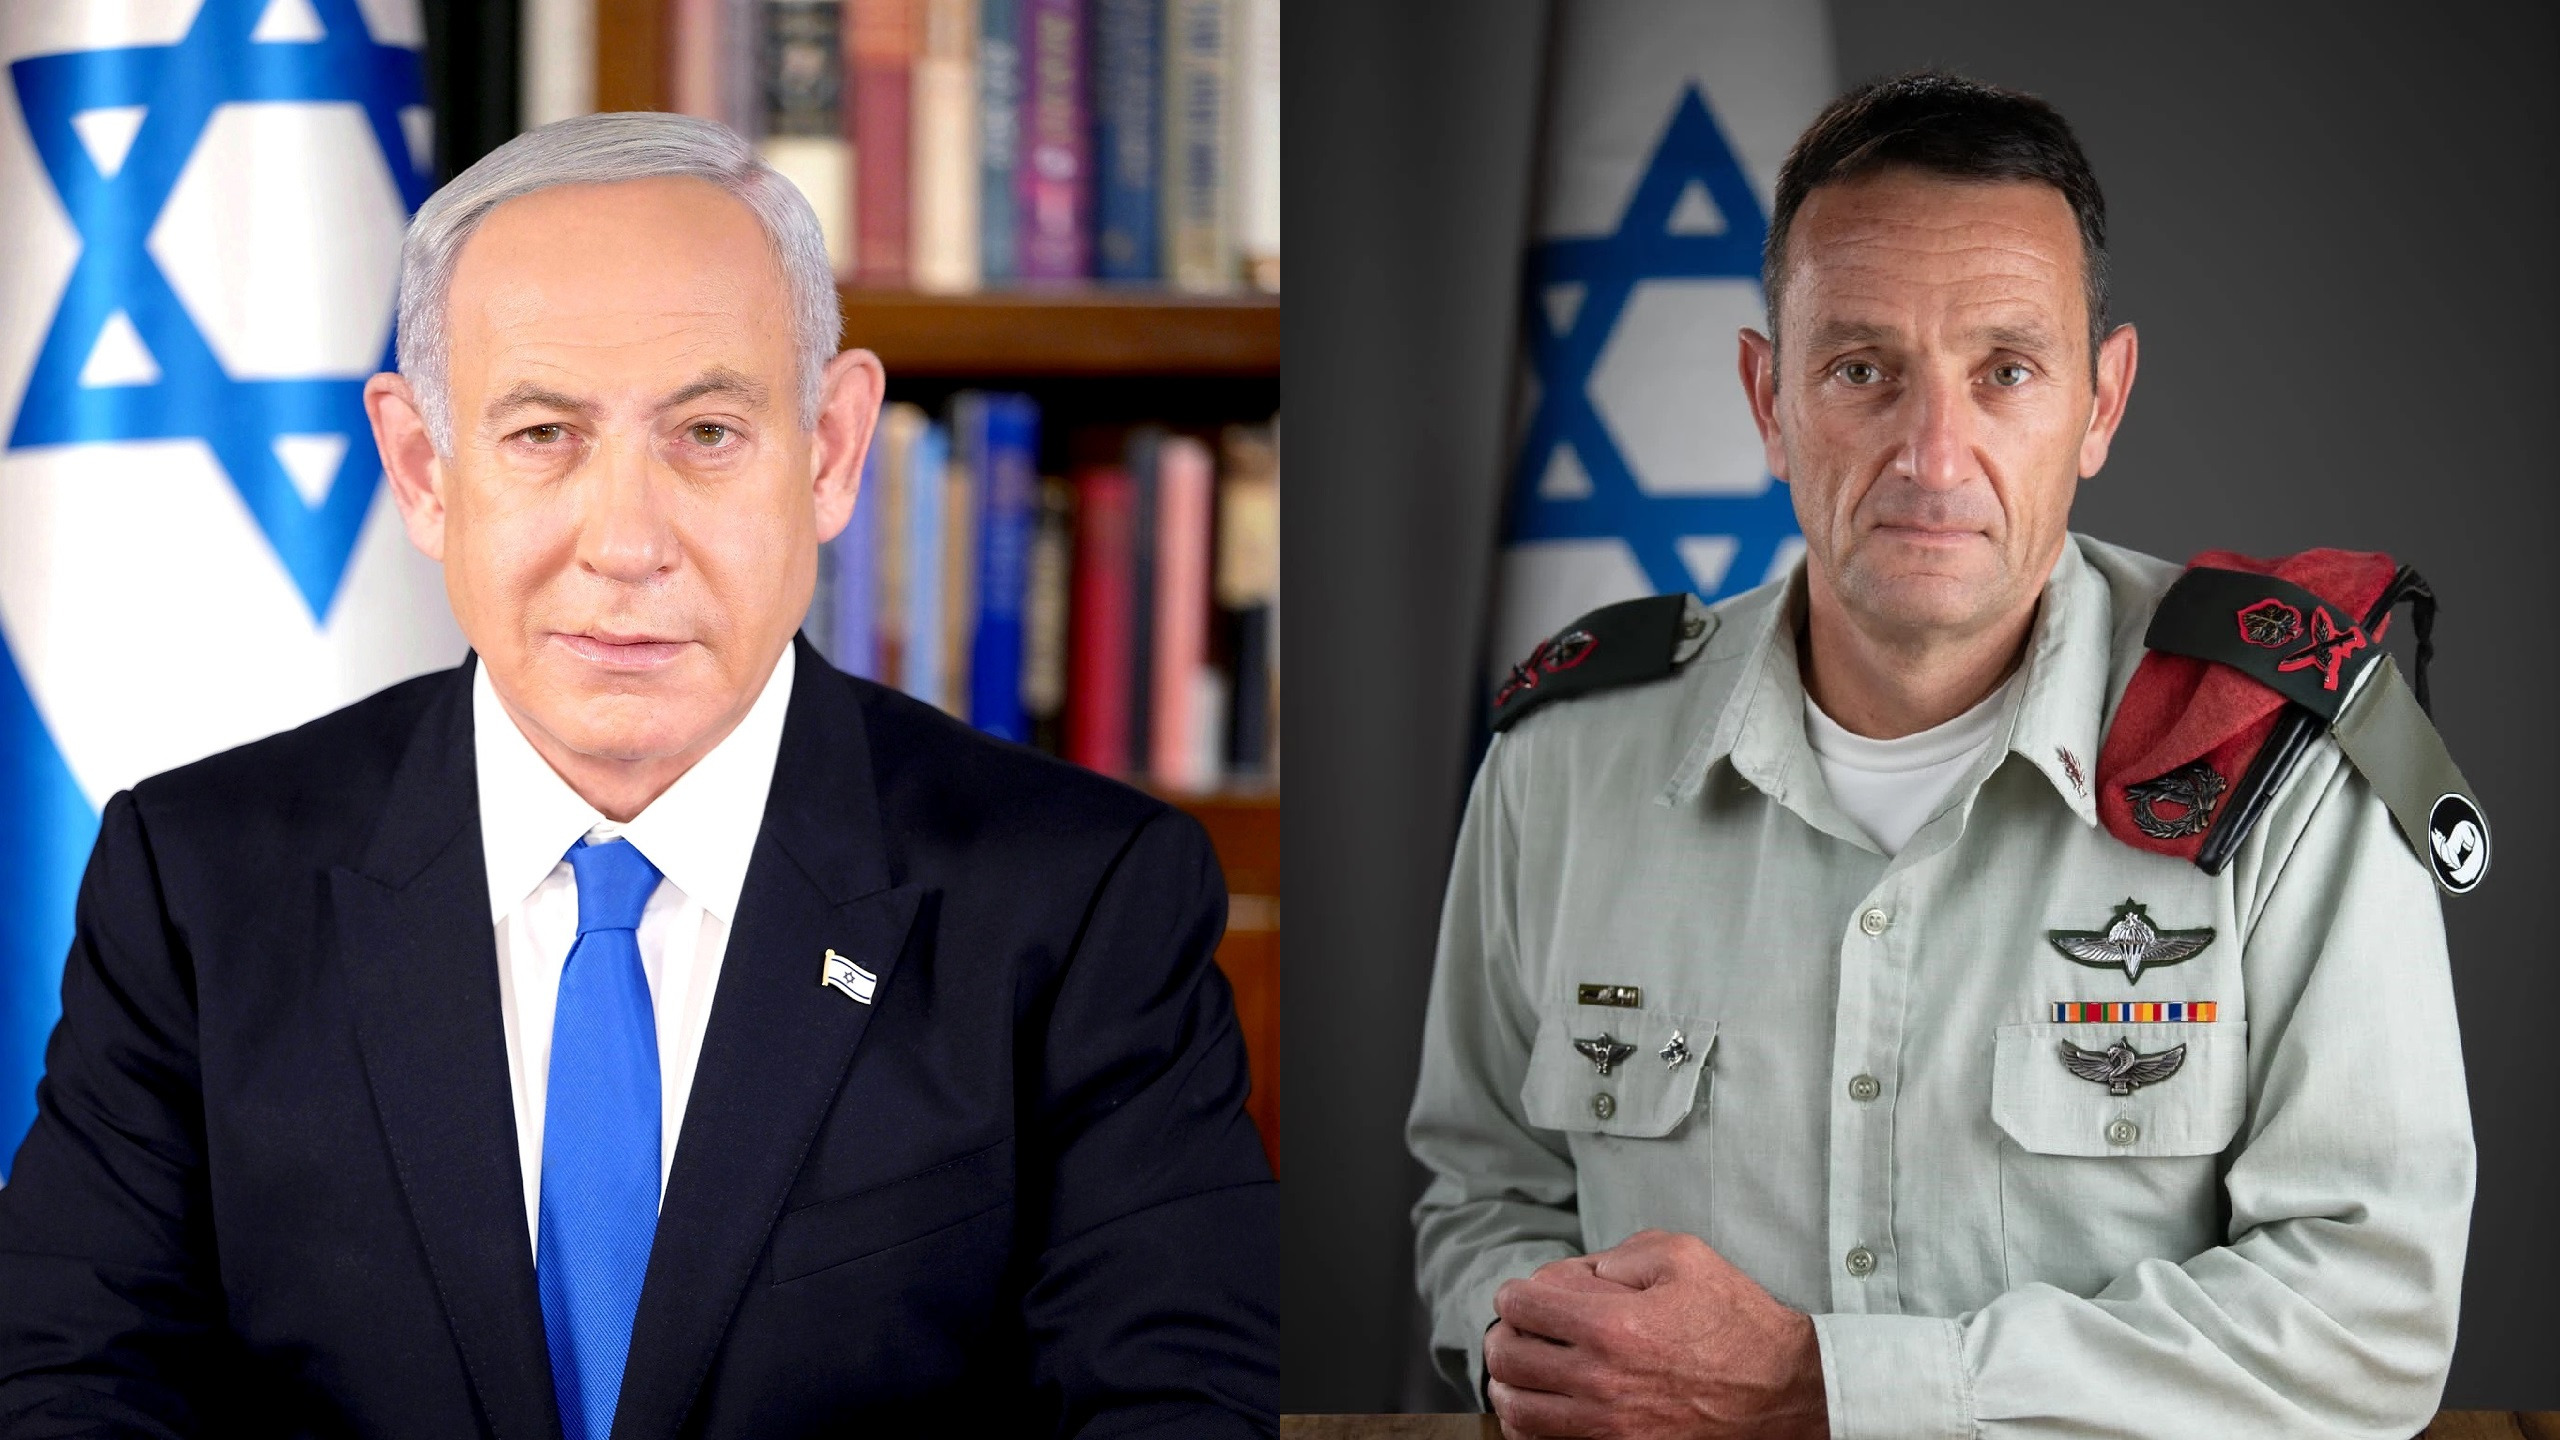 Netanyahu Defends Israeli Military Amid Controversy Over Judicial Reform Plans